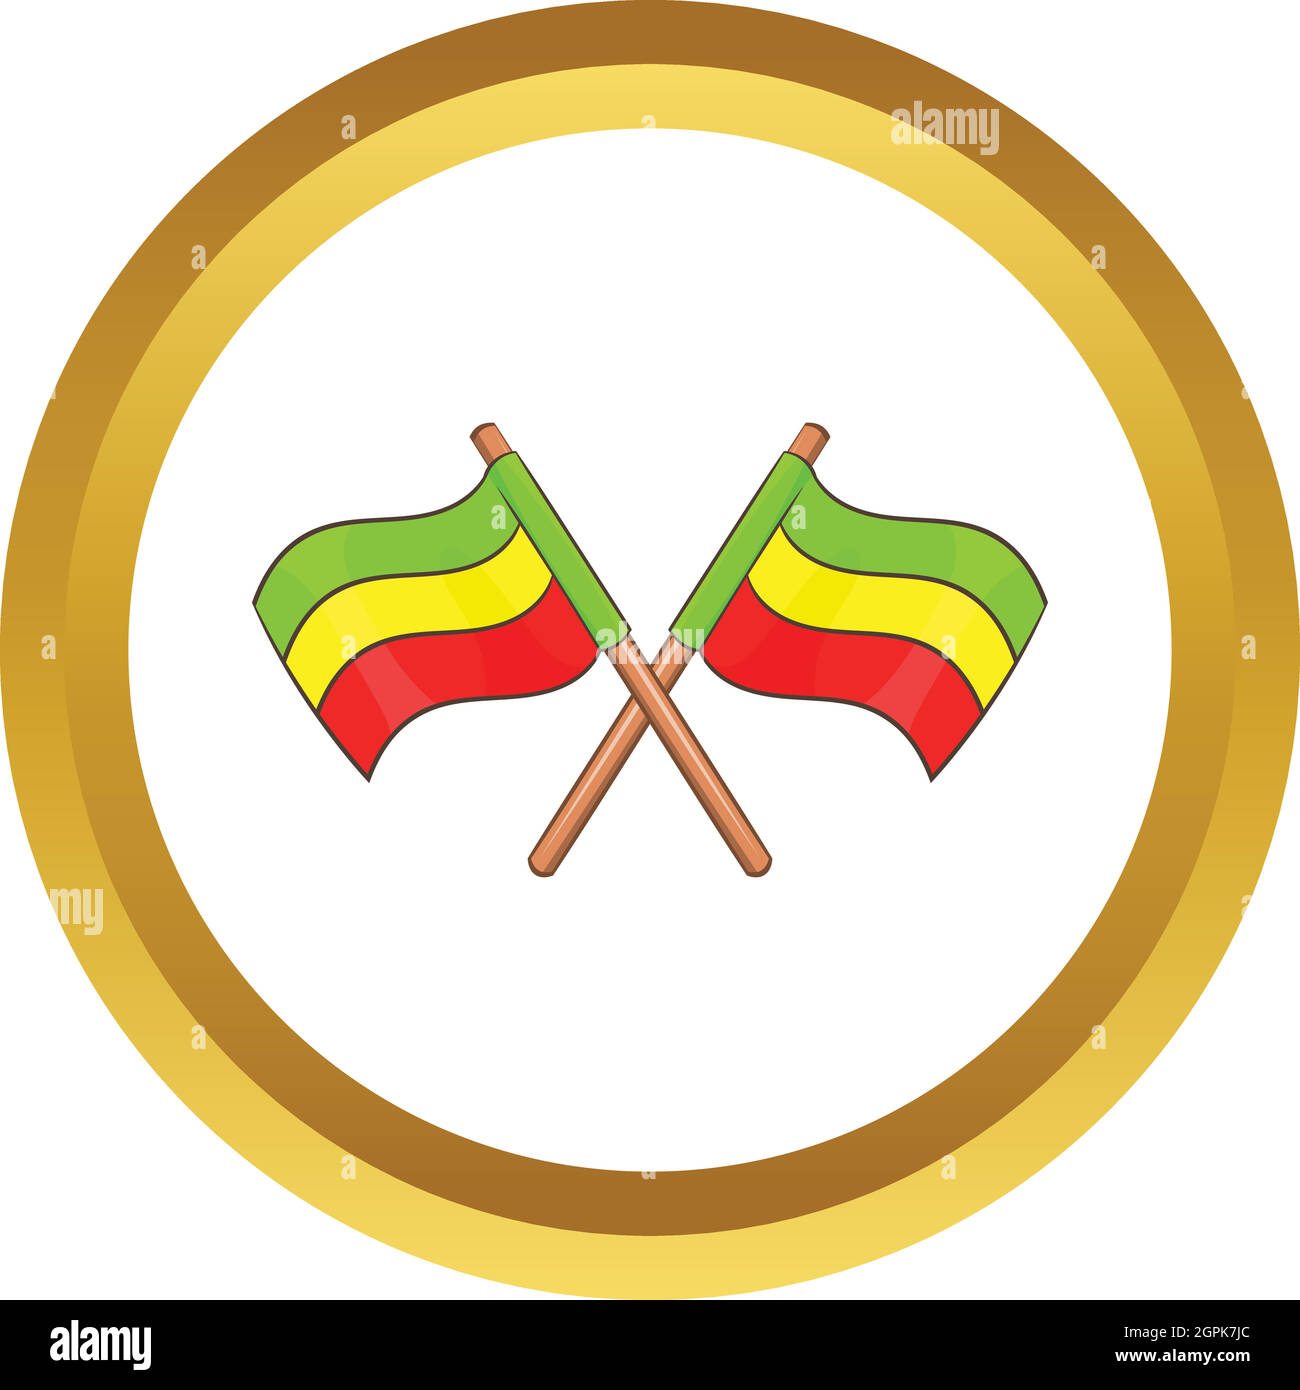 Rastafarian crossed flags vector icon Stock Vector